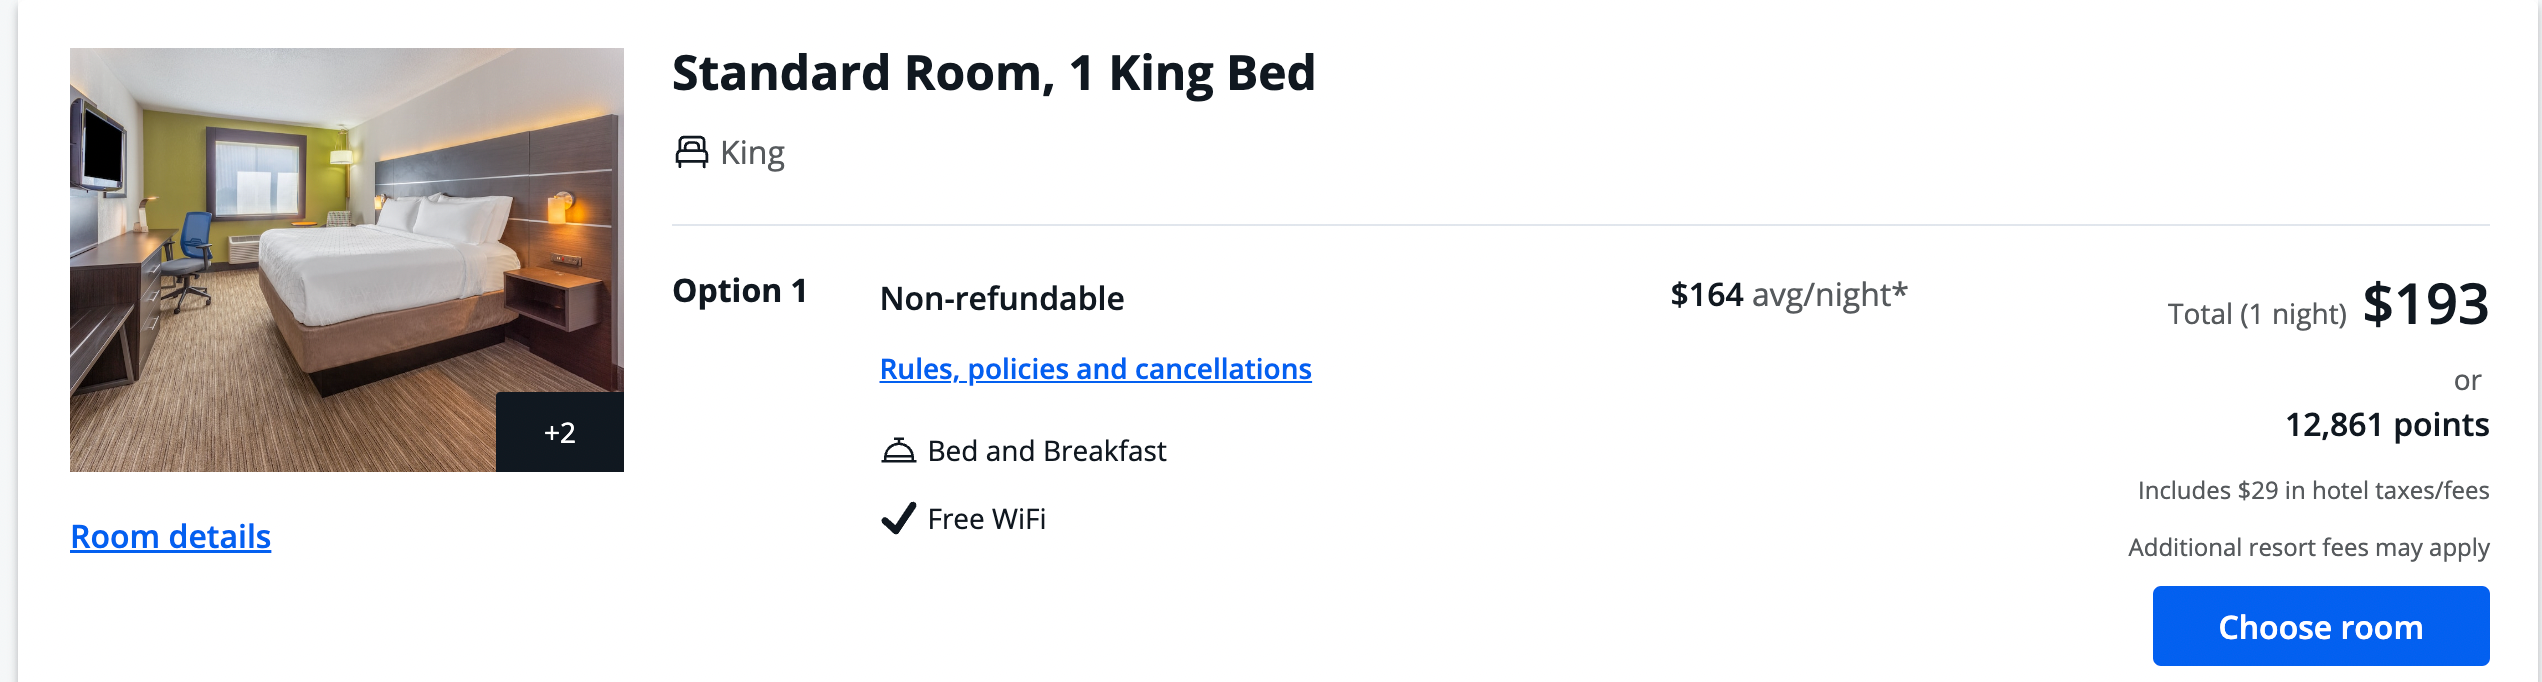 standard room booking